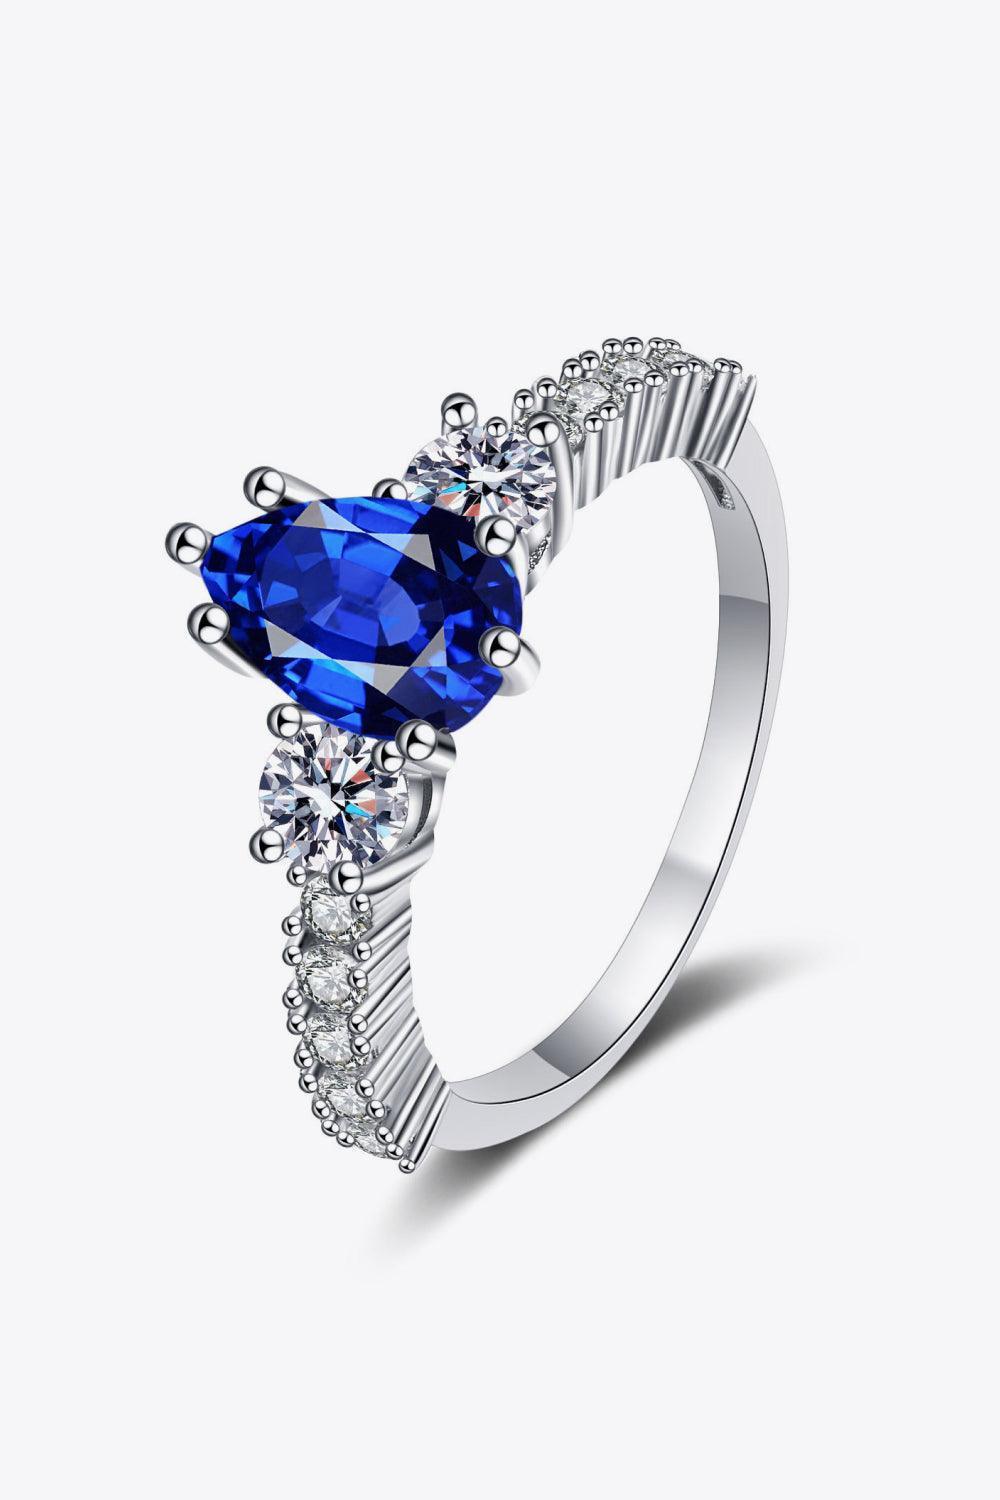 Boundless Sparkle Blue Pear Shape Spinel Ring - MXSTUDIO.COM